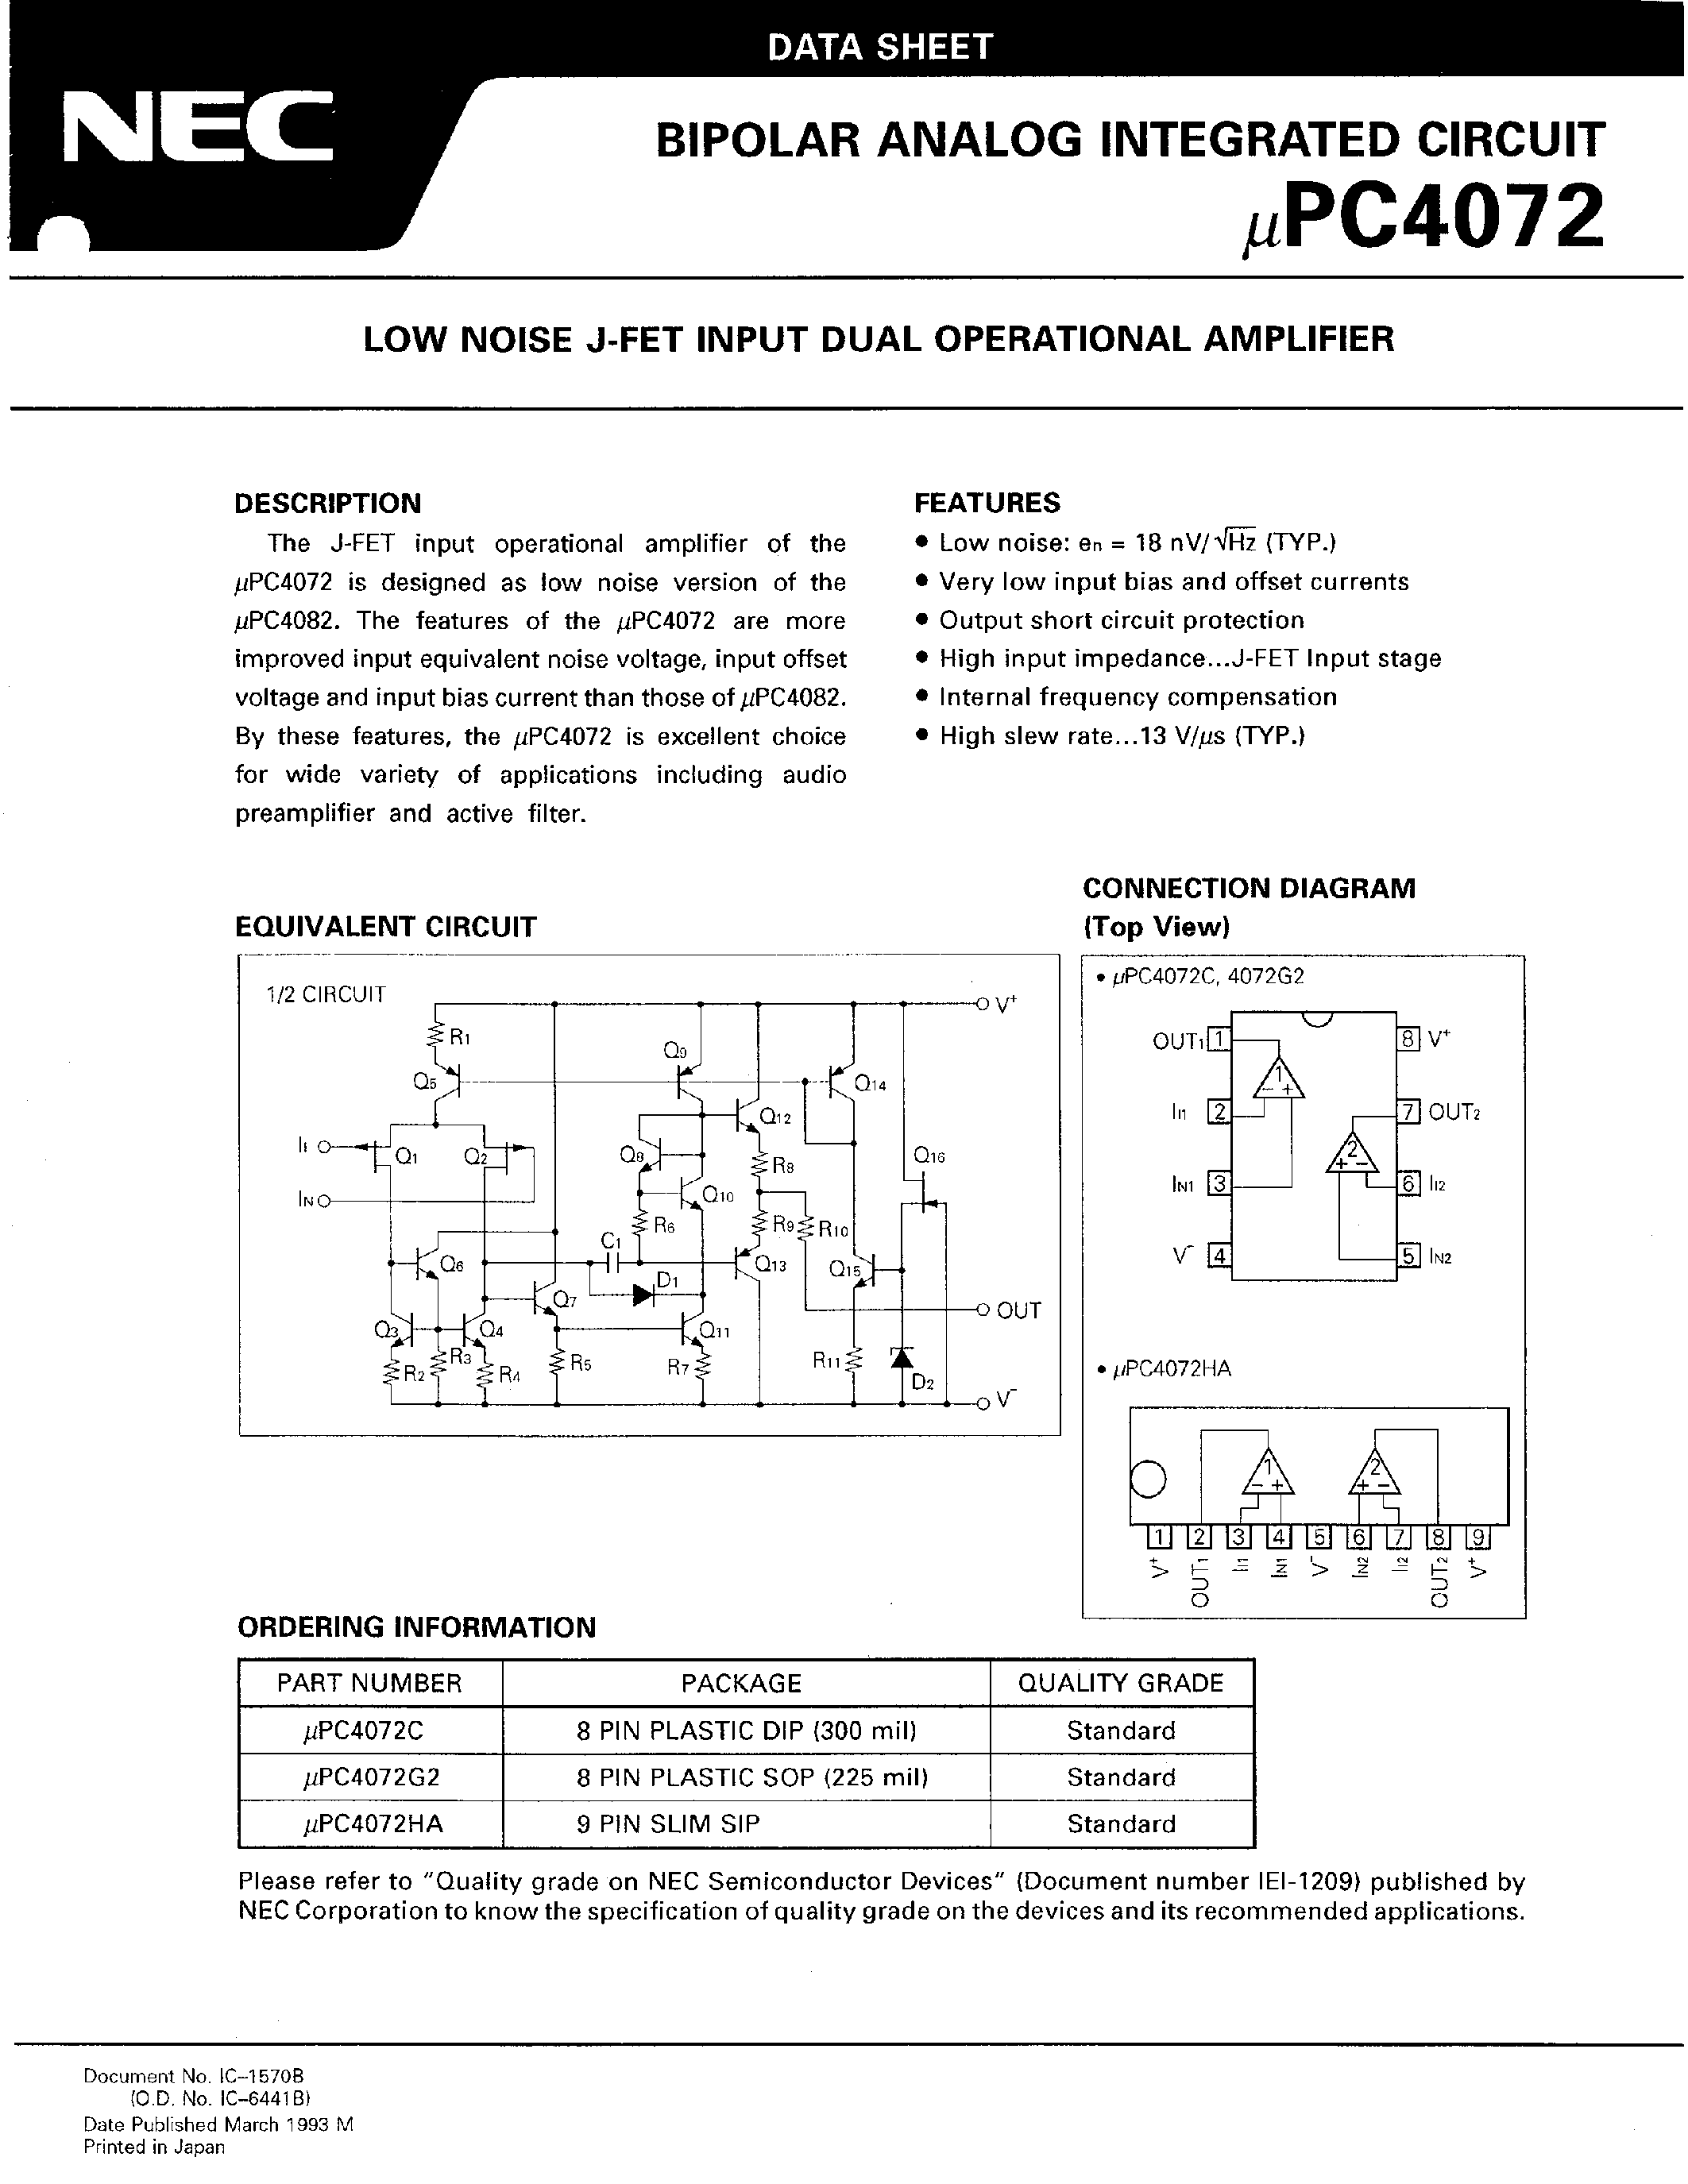 Даташит UPC4072 - LOW NOISE J-FET INPUT DUAL OPERATIONAL AMPLIFIER страница 1